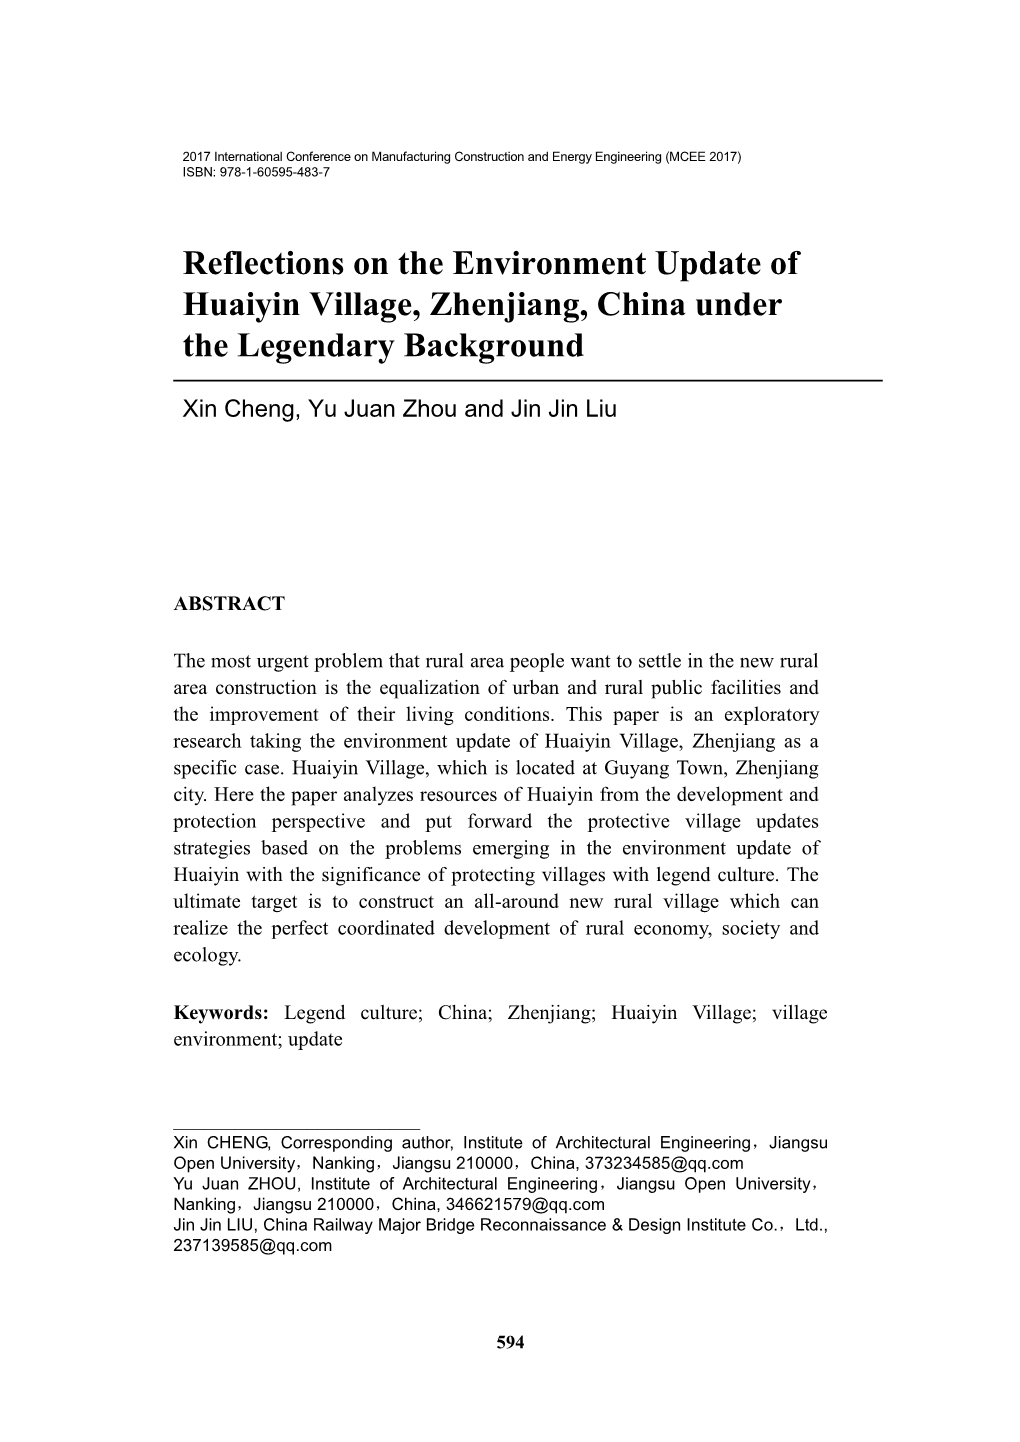 Reflections on the Environment Update of Huaiyin Village, Zhenjiang, China Under